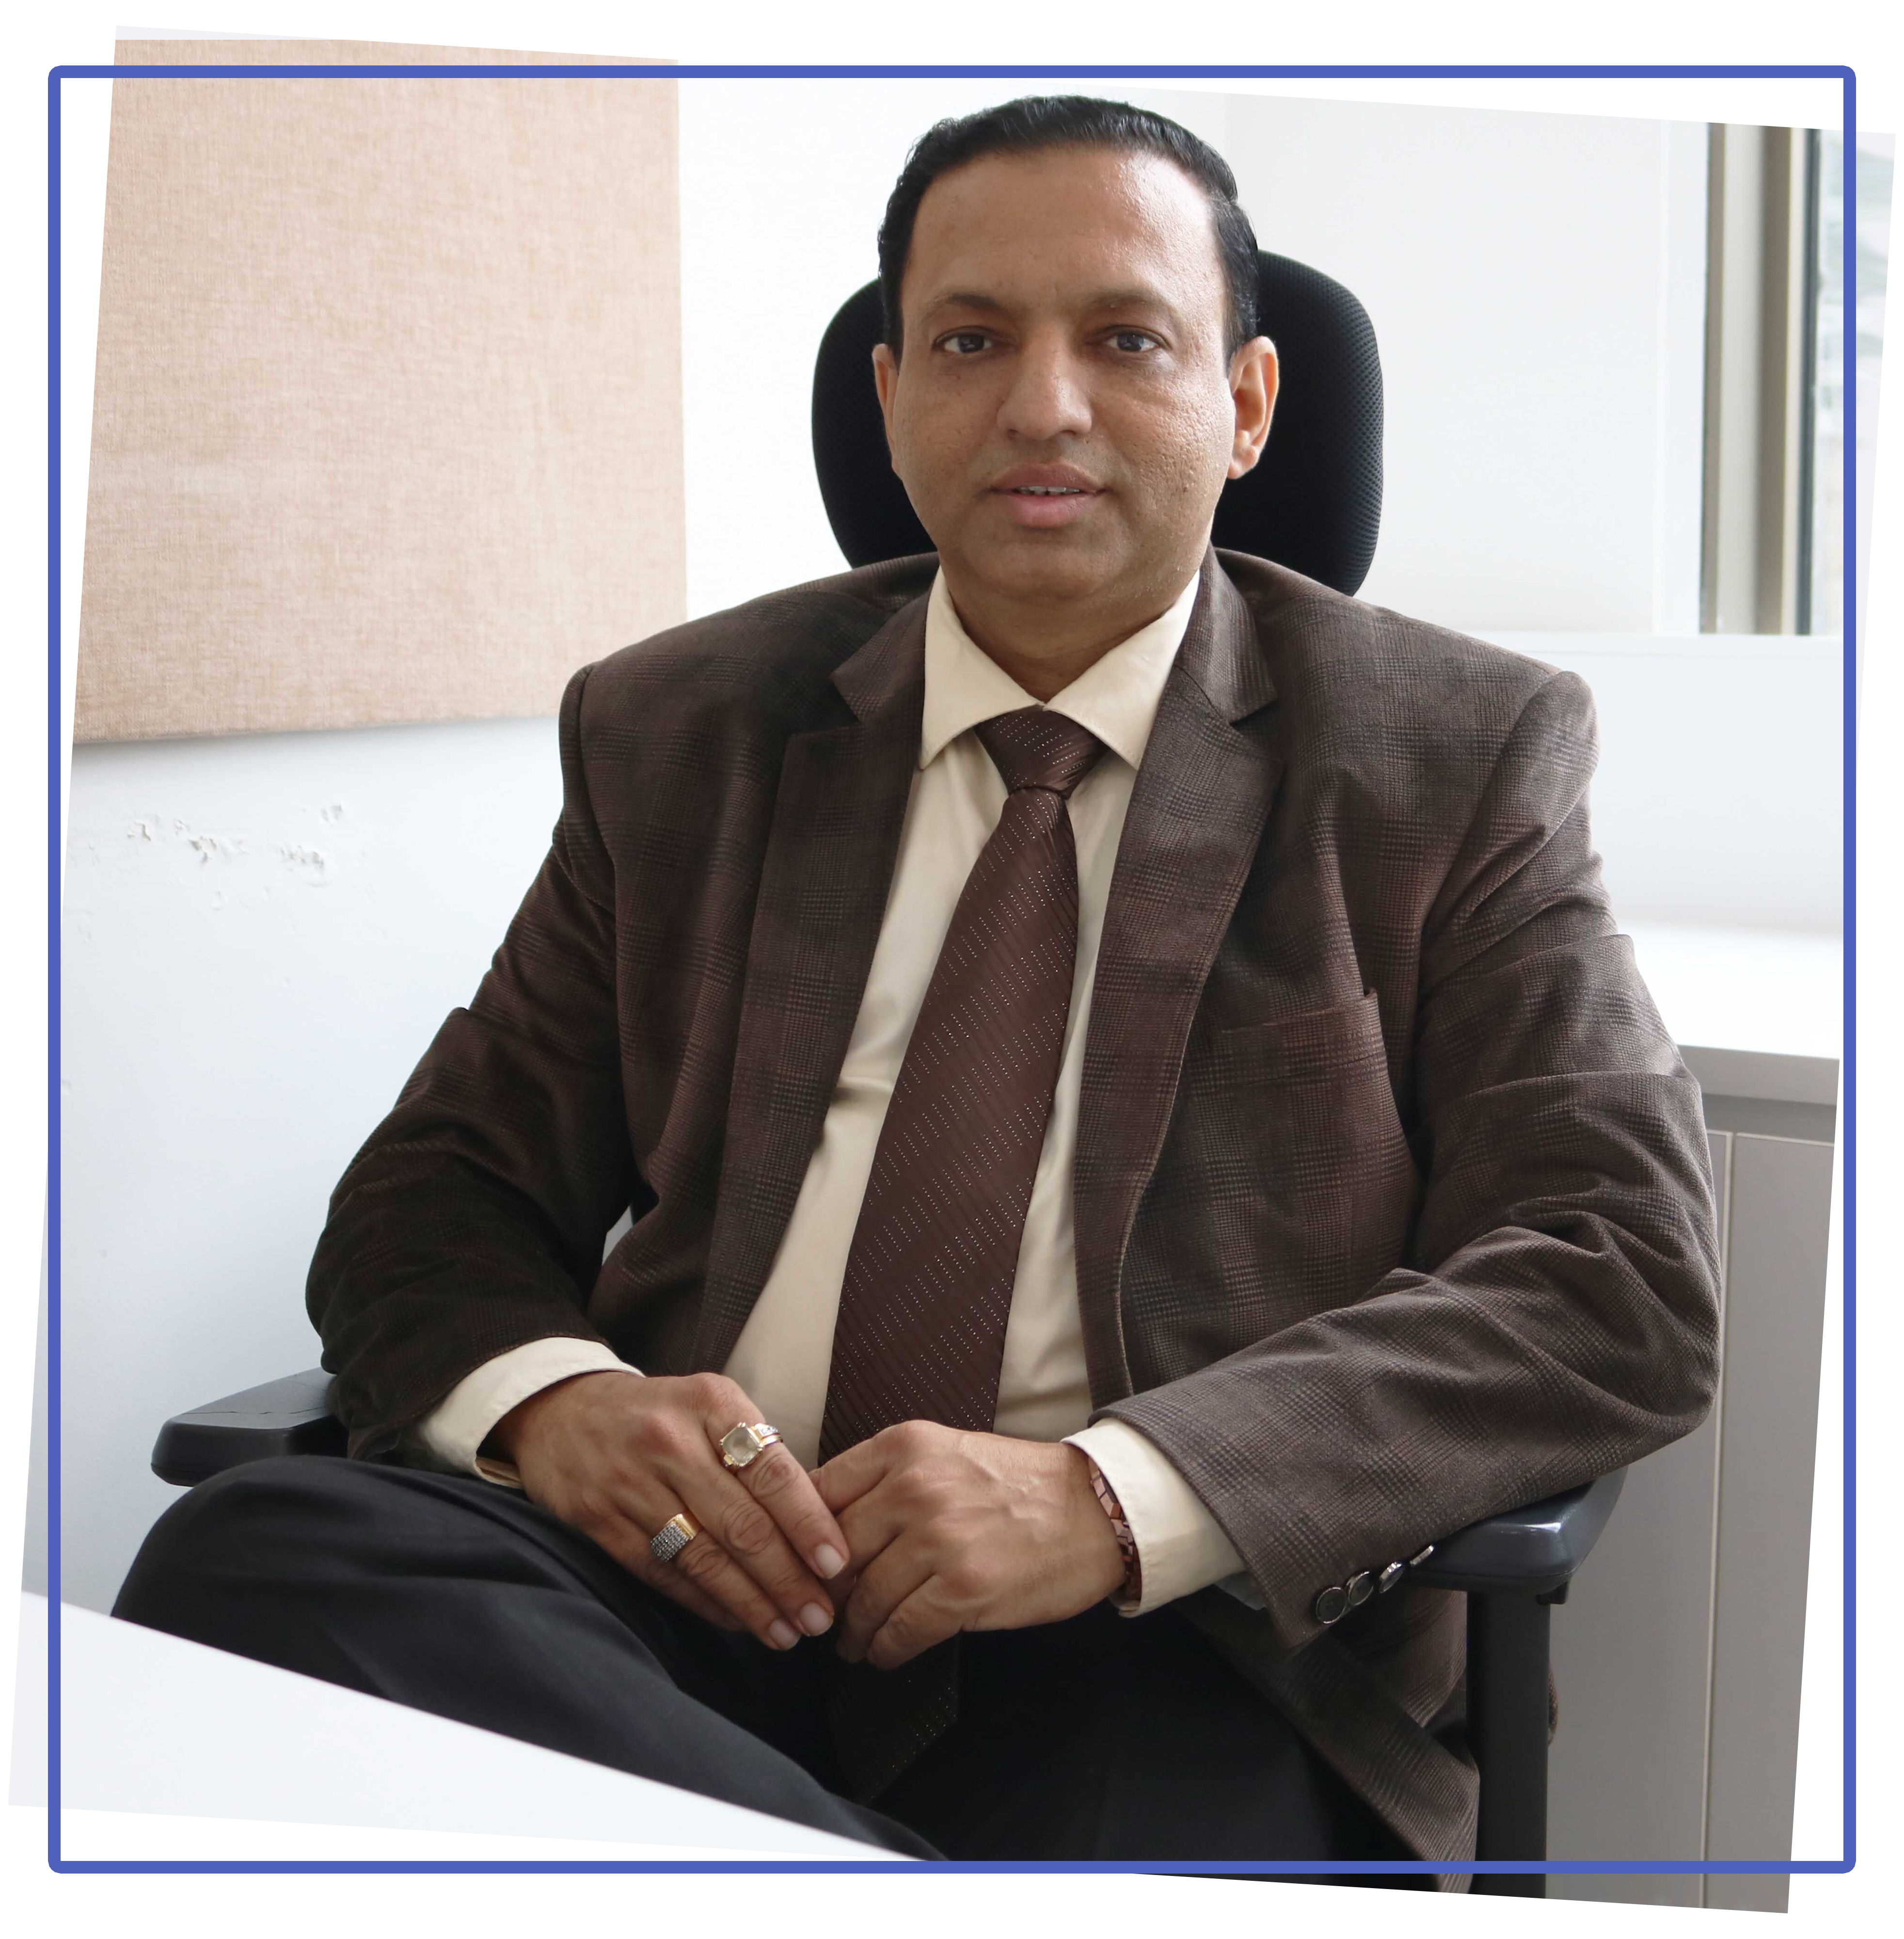 dr abhijit bagul - hernia doctor in navi mumbai